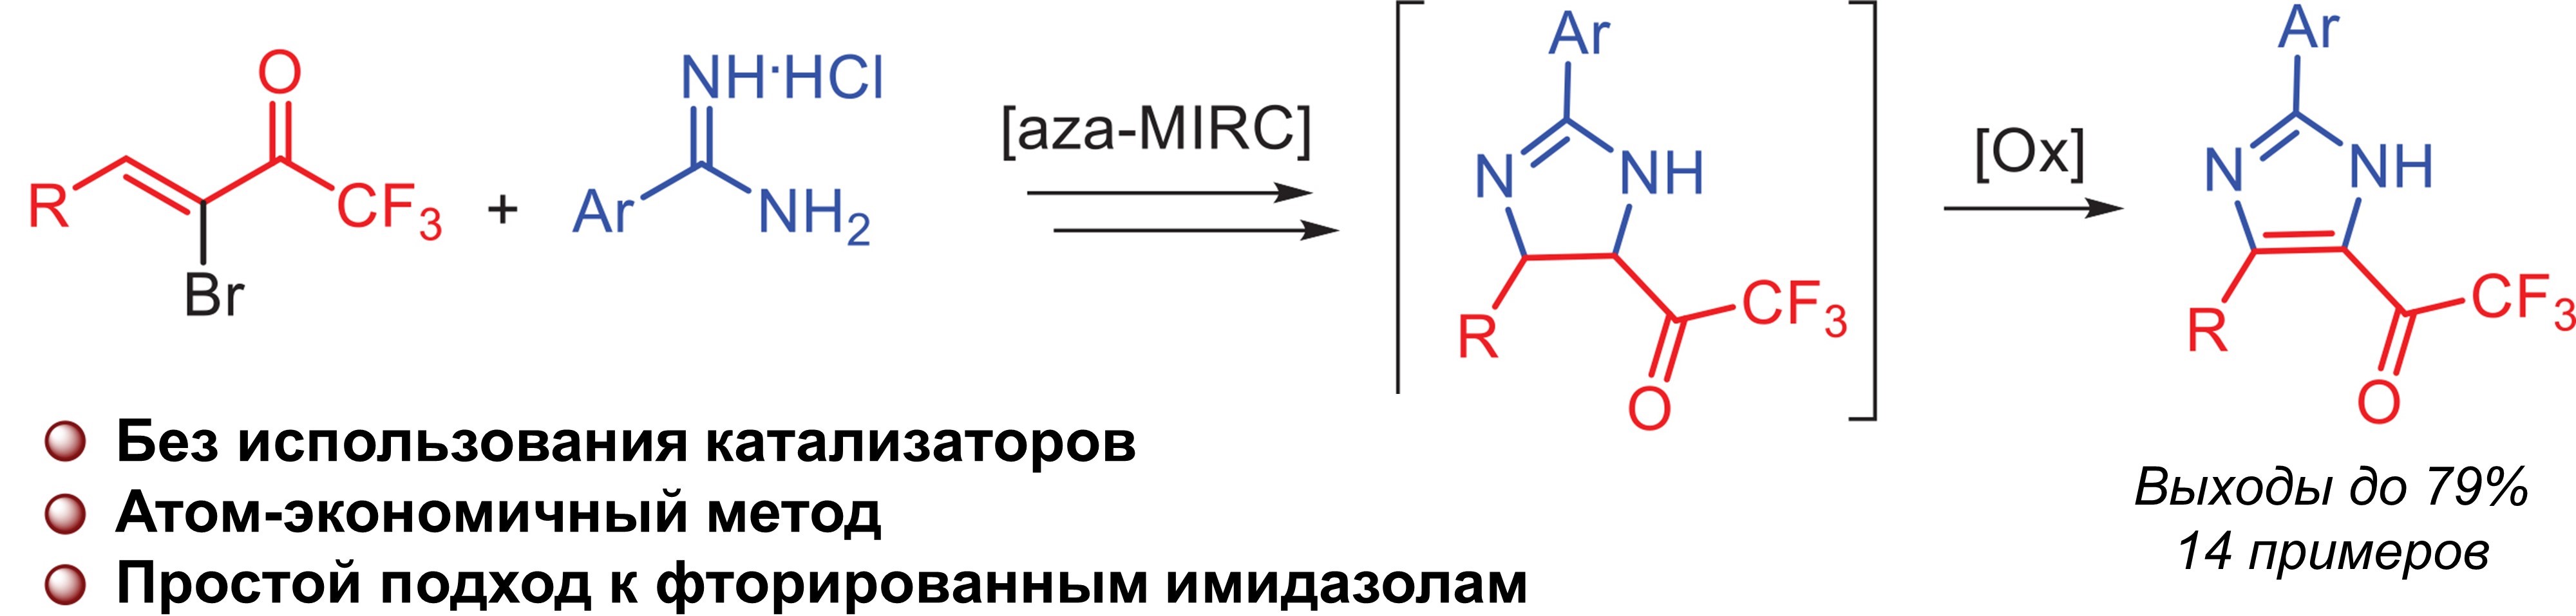 sintez-5-triftoratsetilimidazolov-iz-bromenonov-i-benzimidamido_p88532